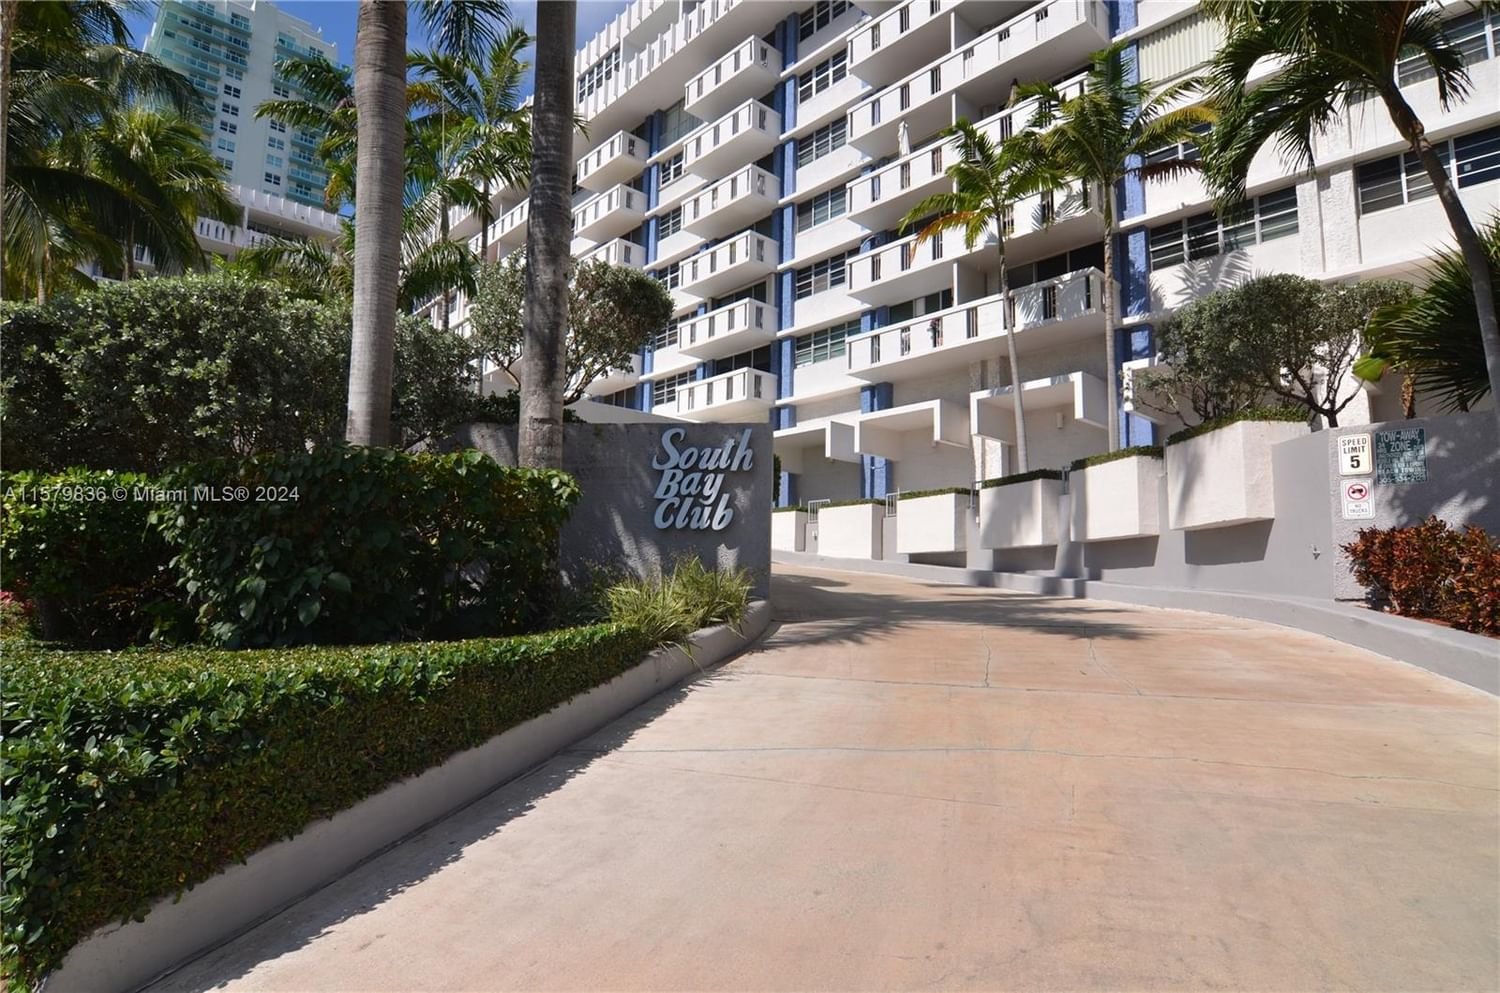 Real estate property located at 800 West Ave PH-44, Miami-Dade County, SOUTH BAY CLUB CONDO, Miami Beach, FL